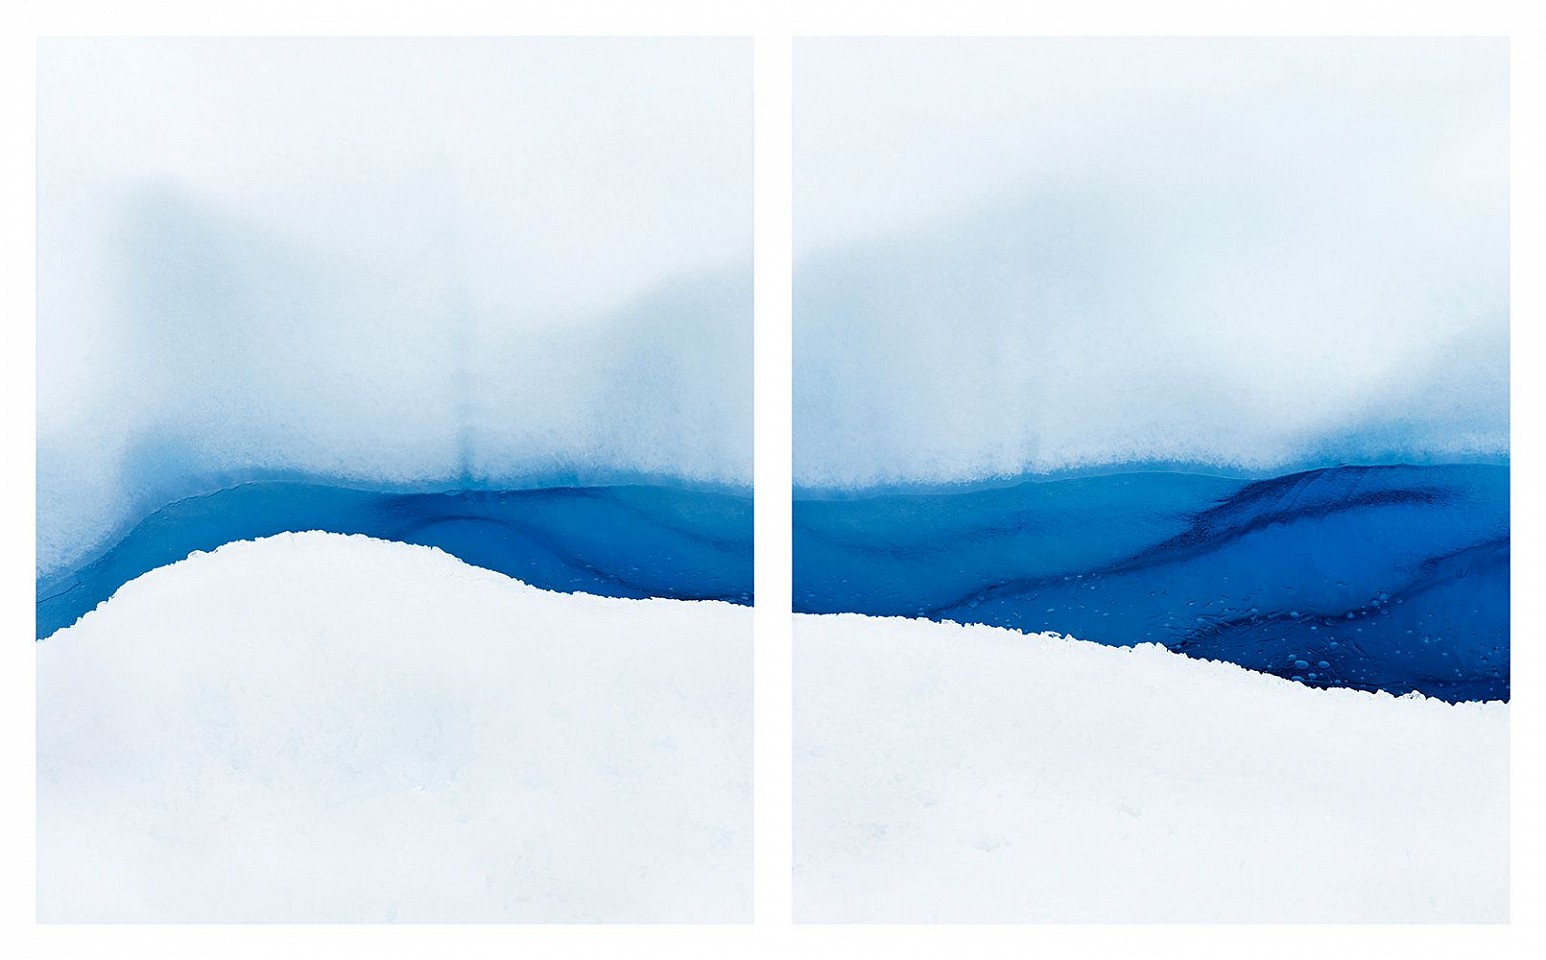 Jonathan Smith, Glacier #4
Chromogenic Print
Available in: 30 x 48 inches, Edition of 8 | 40 x 64 inches, Edition of 5 | 50 x 80 inches, Edition of 3
7563